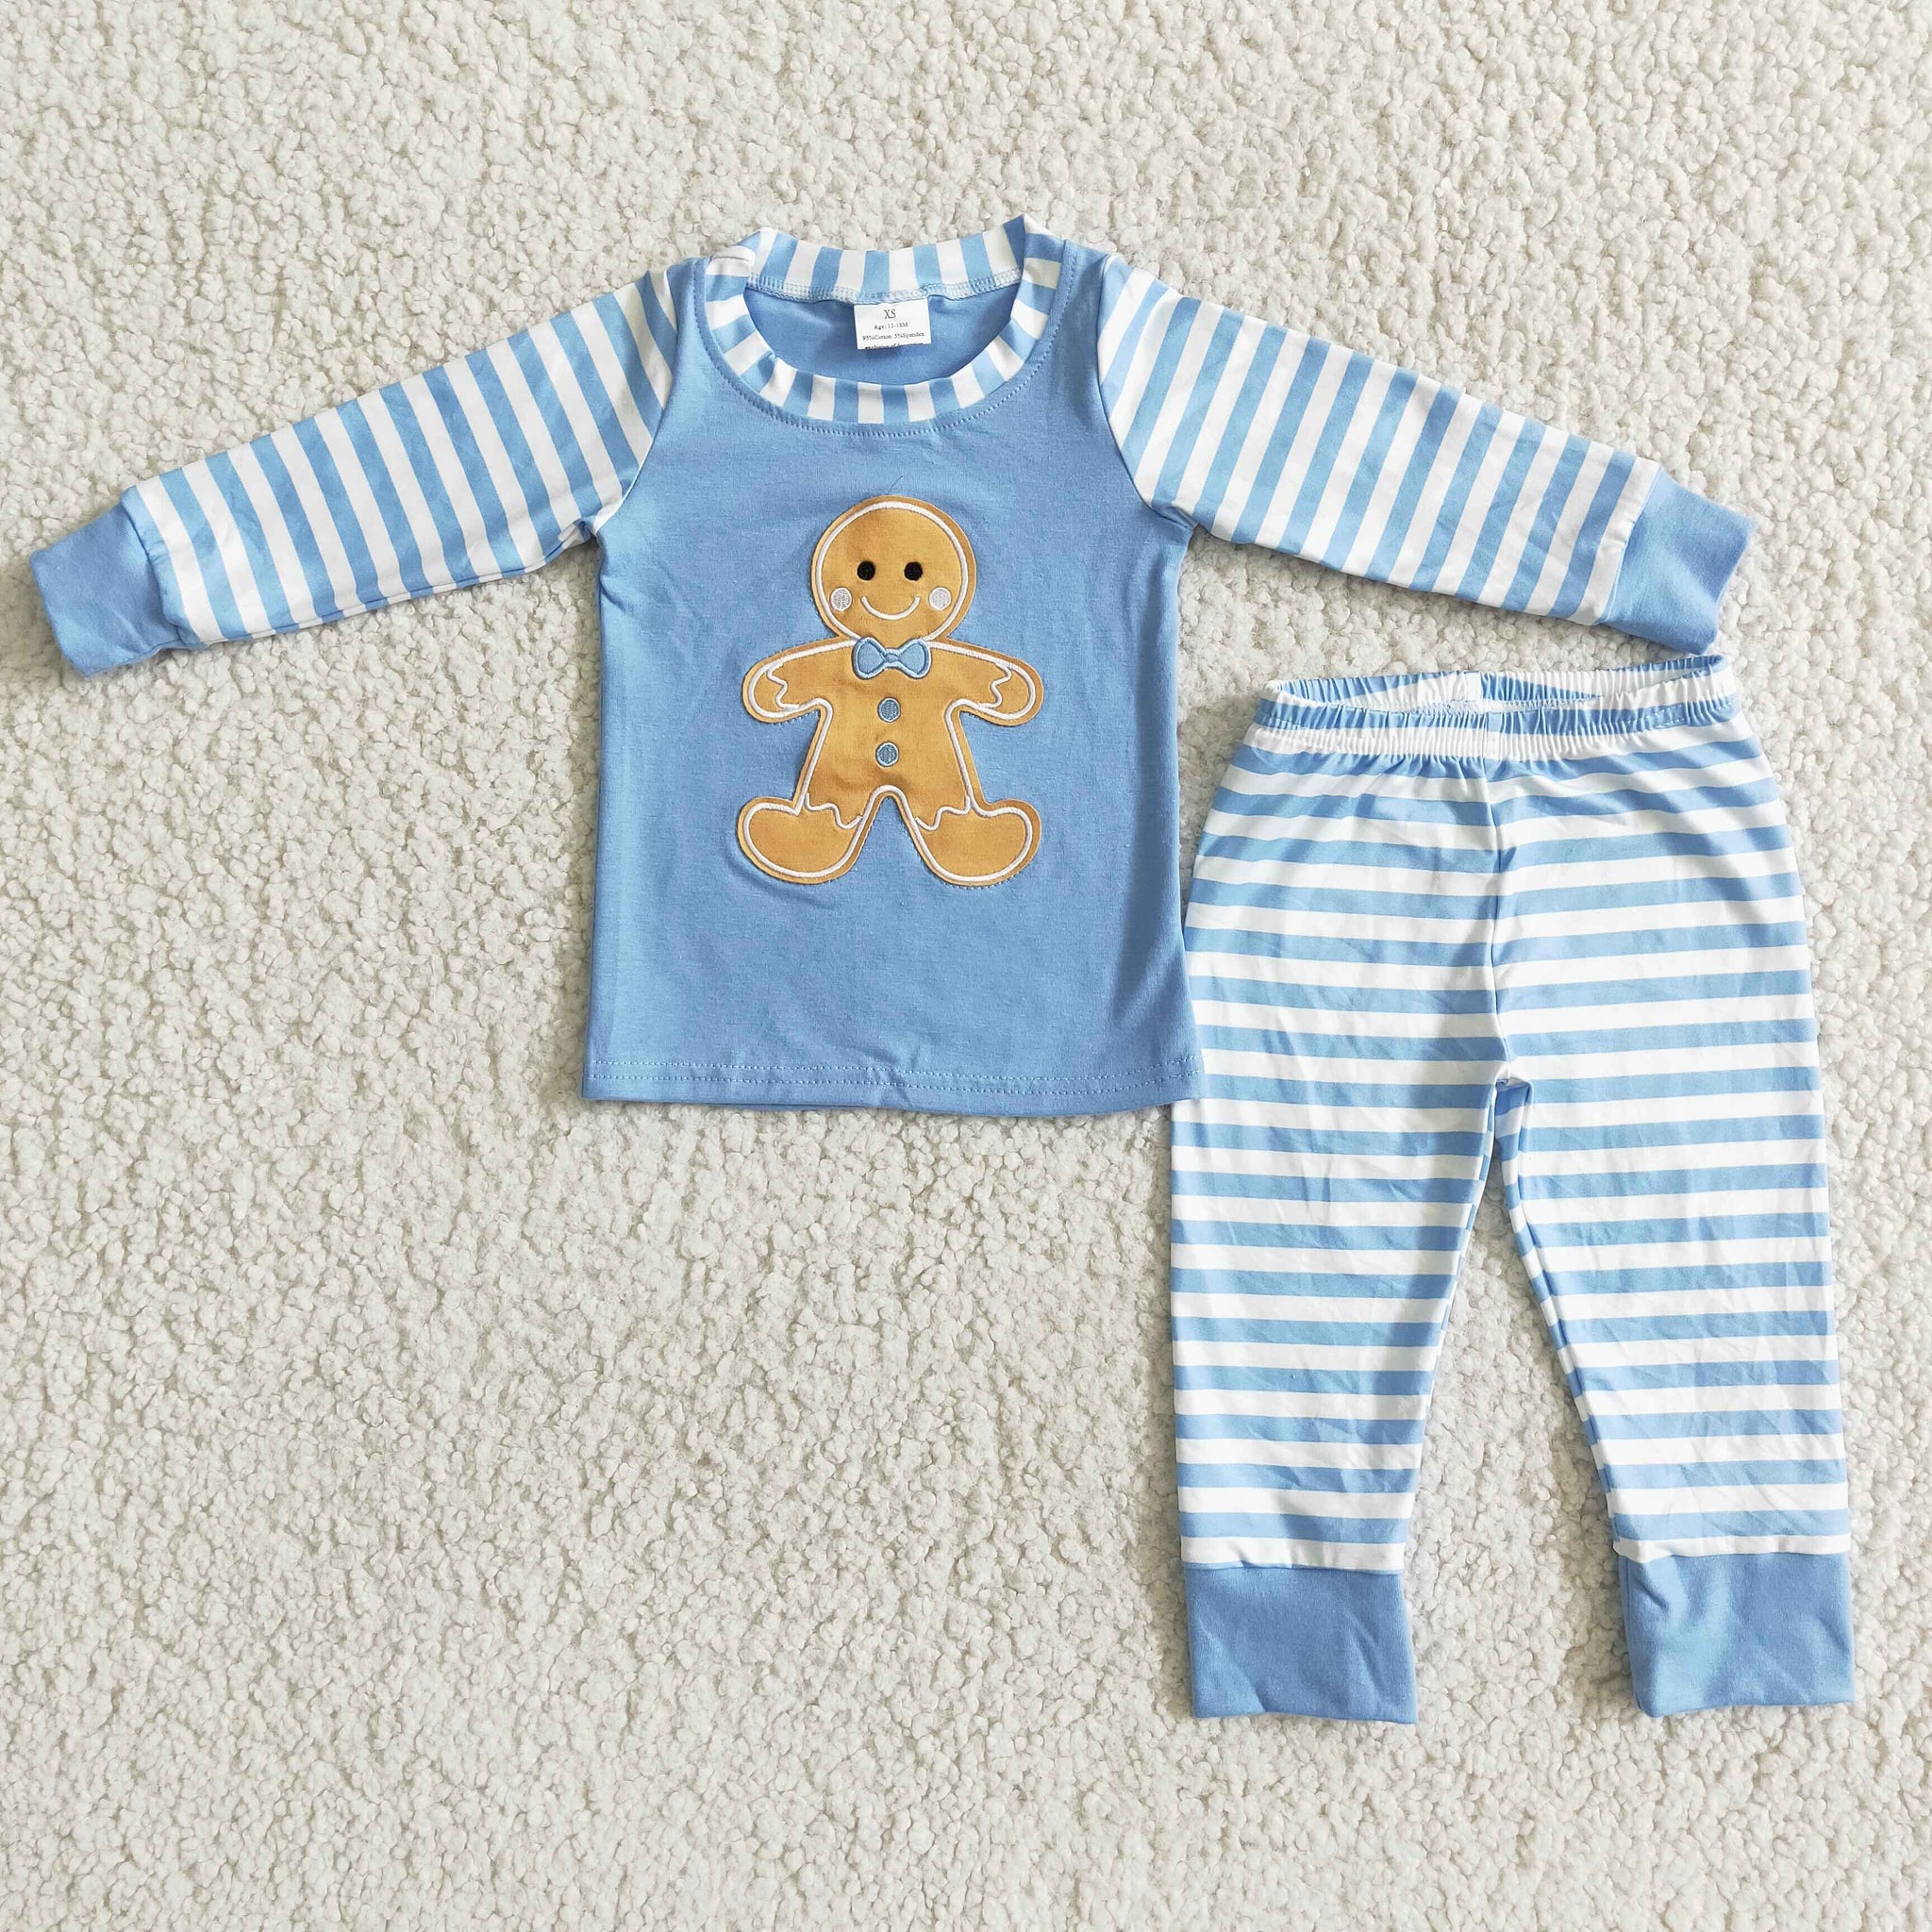 6 B8-23 sleepwear boy blue stripe winter cartoon embroidery pajama sets